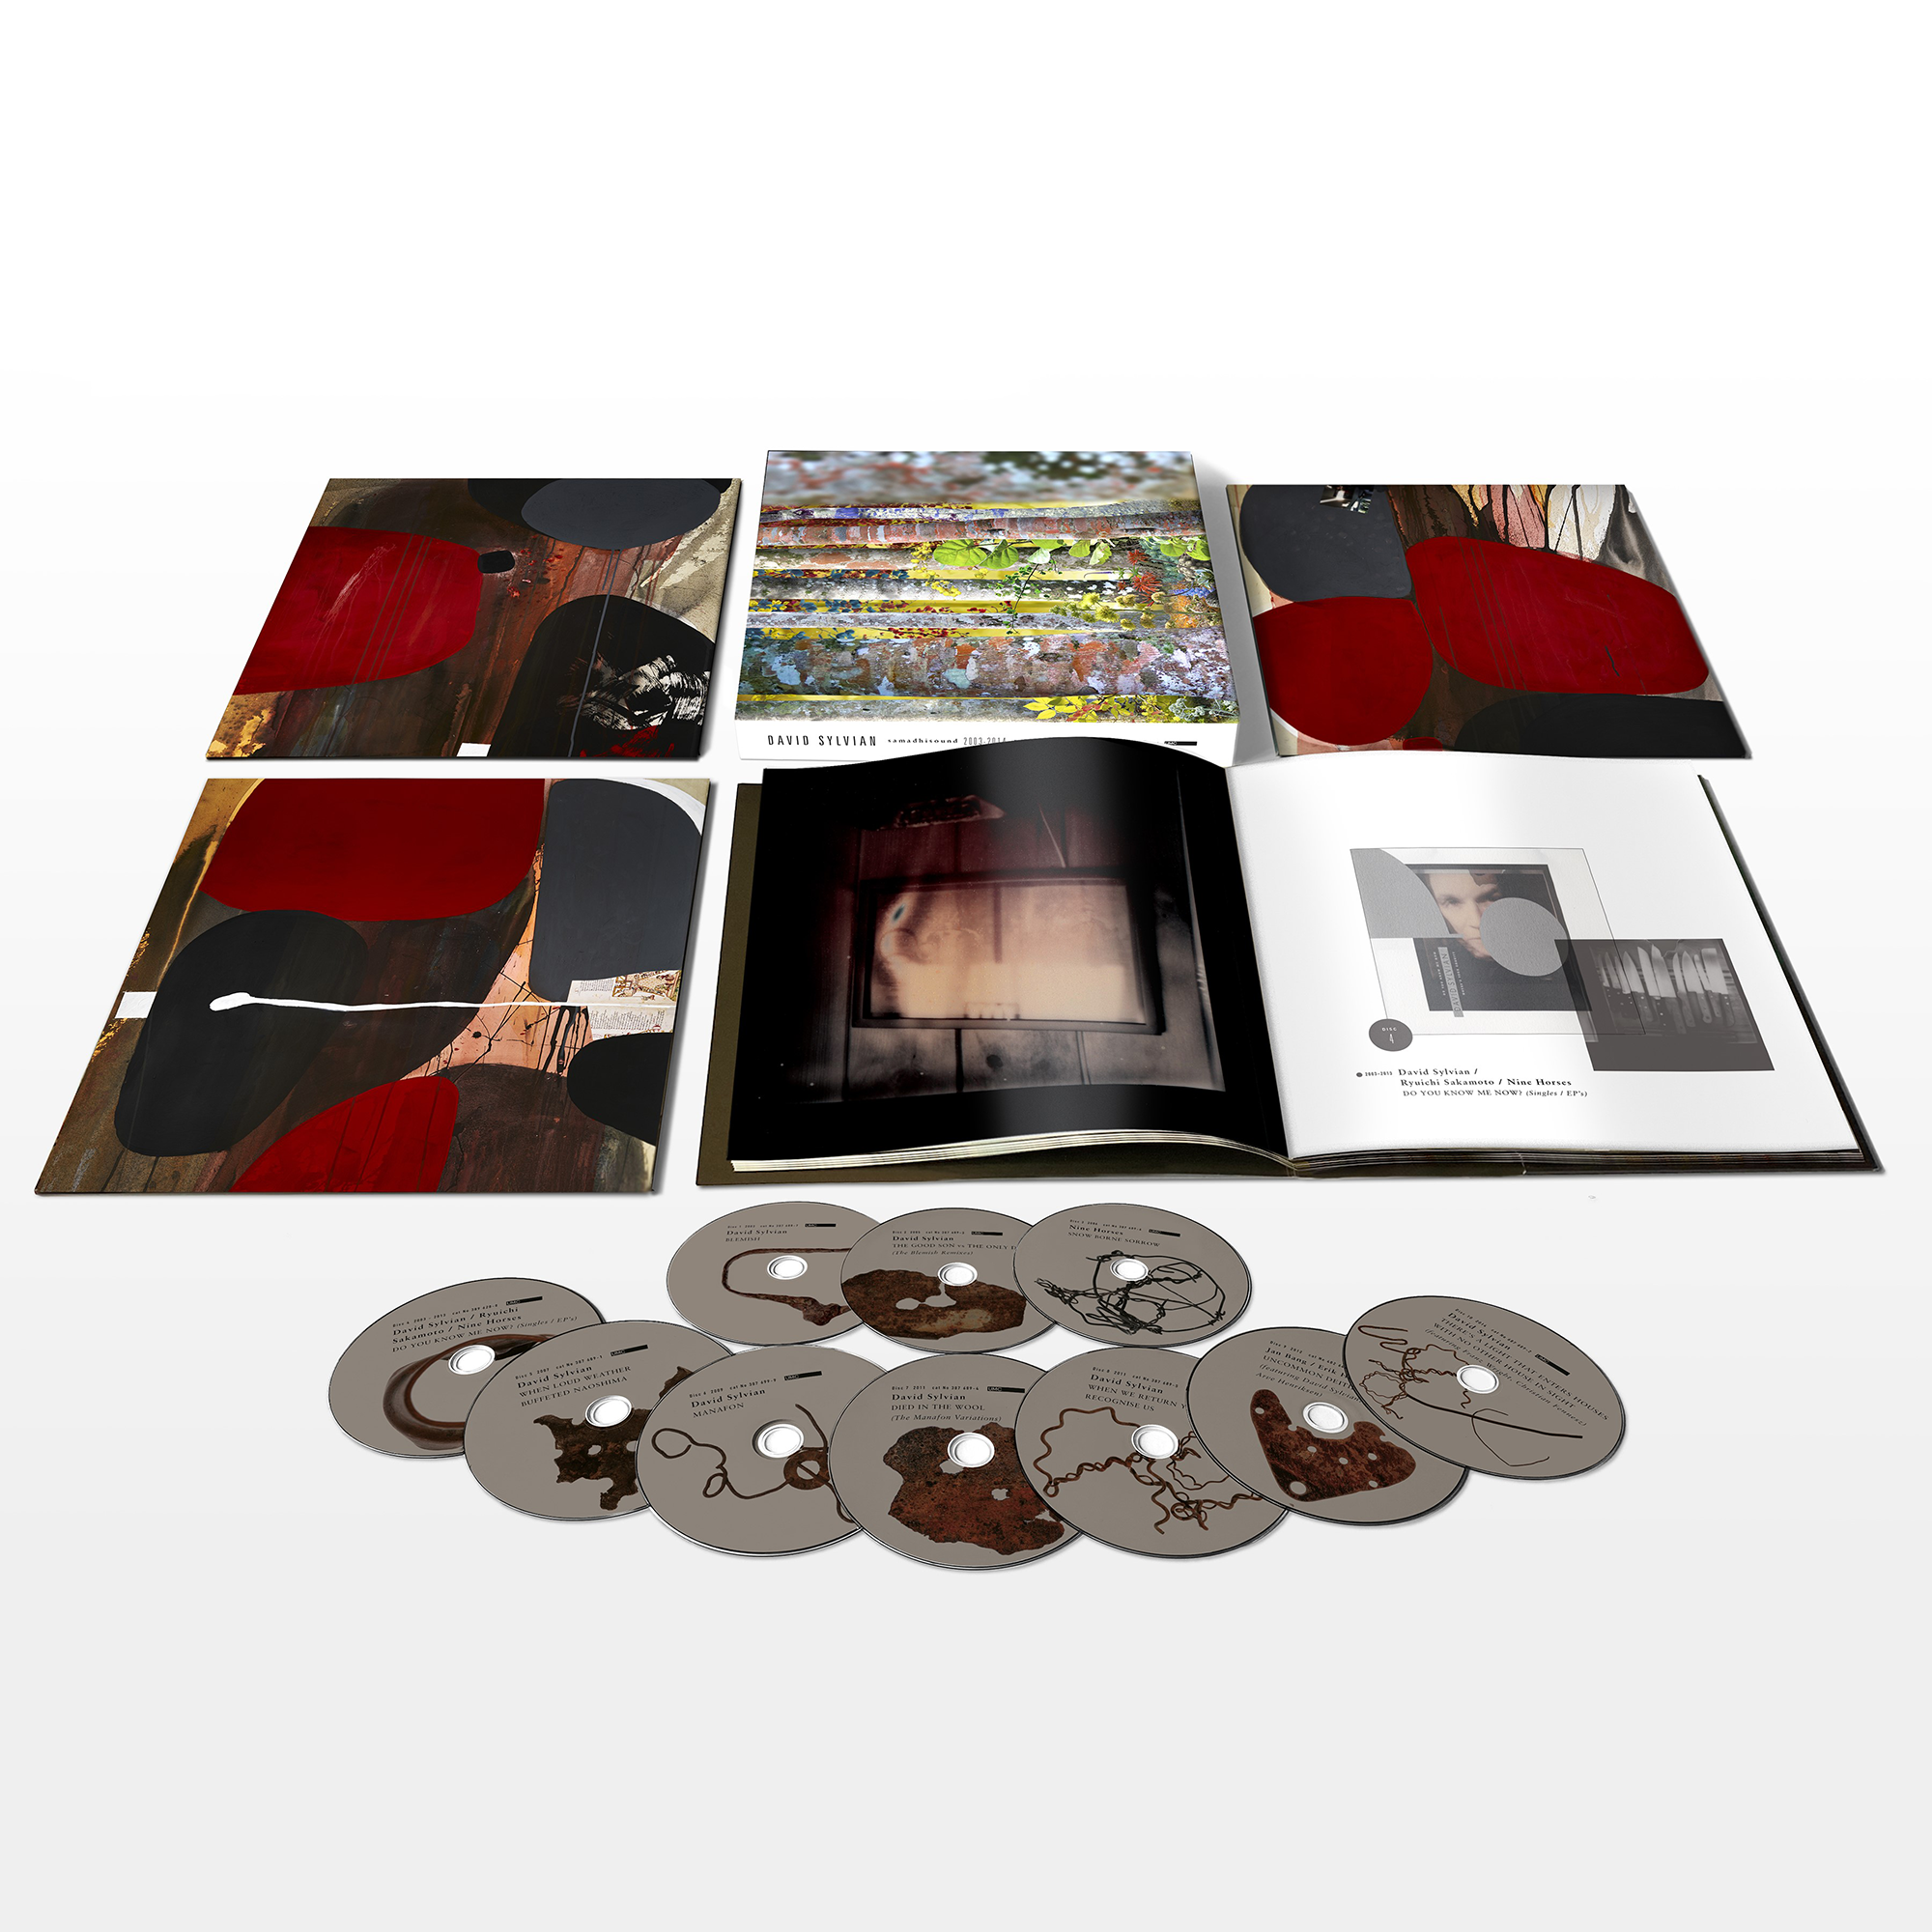 David Sylvian - David Sylvian - Do You Know Me Now? (Exclusive 10CD Box Set)